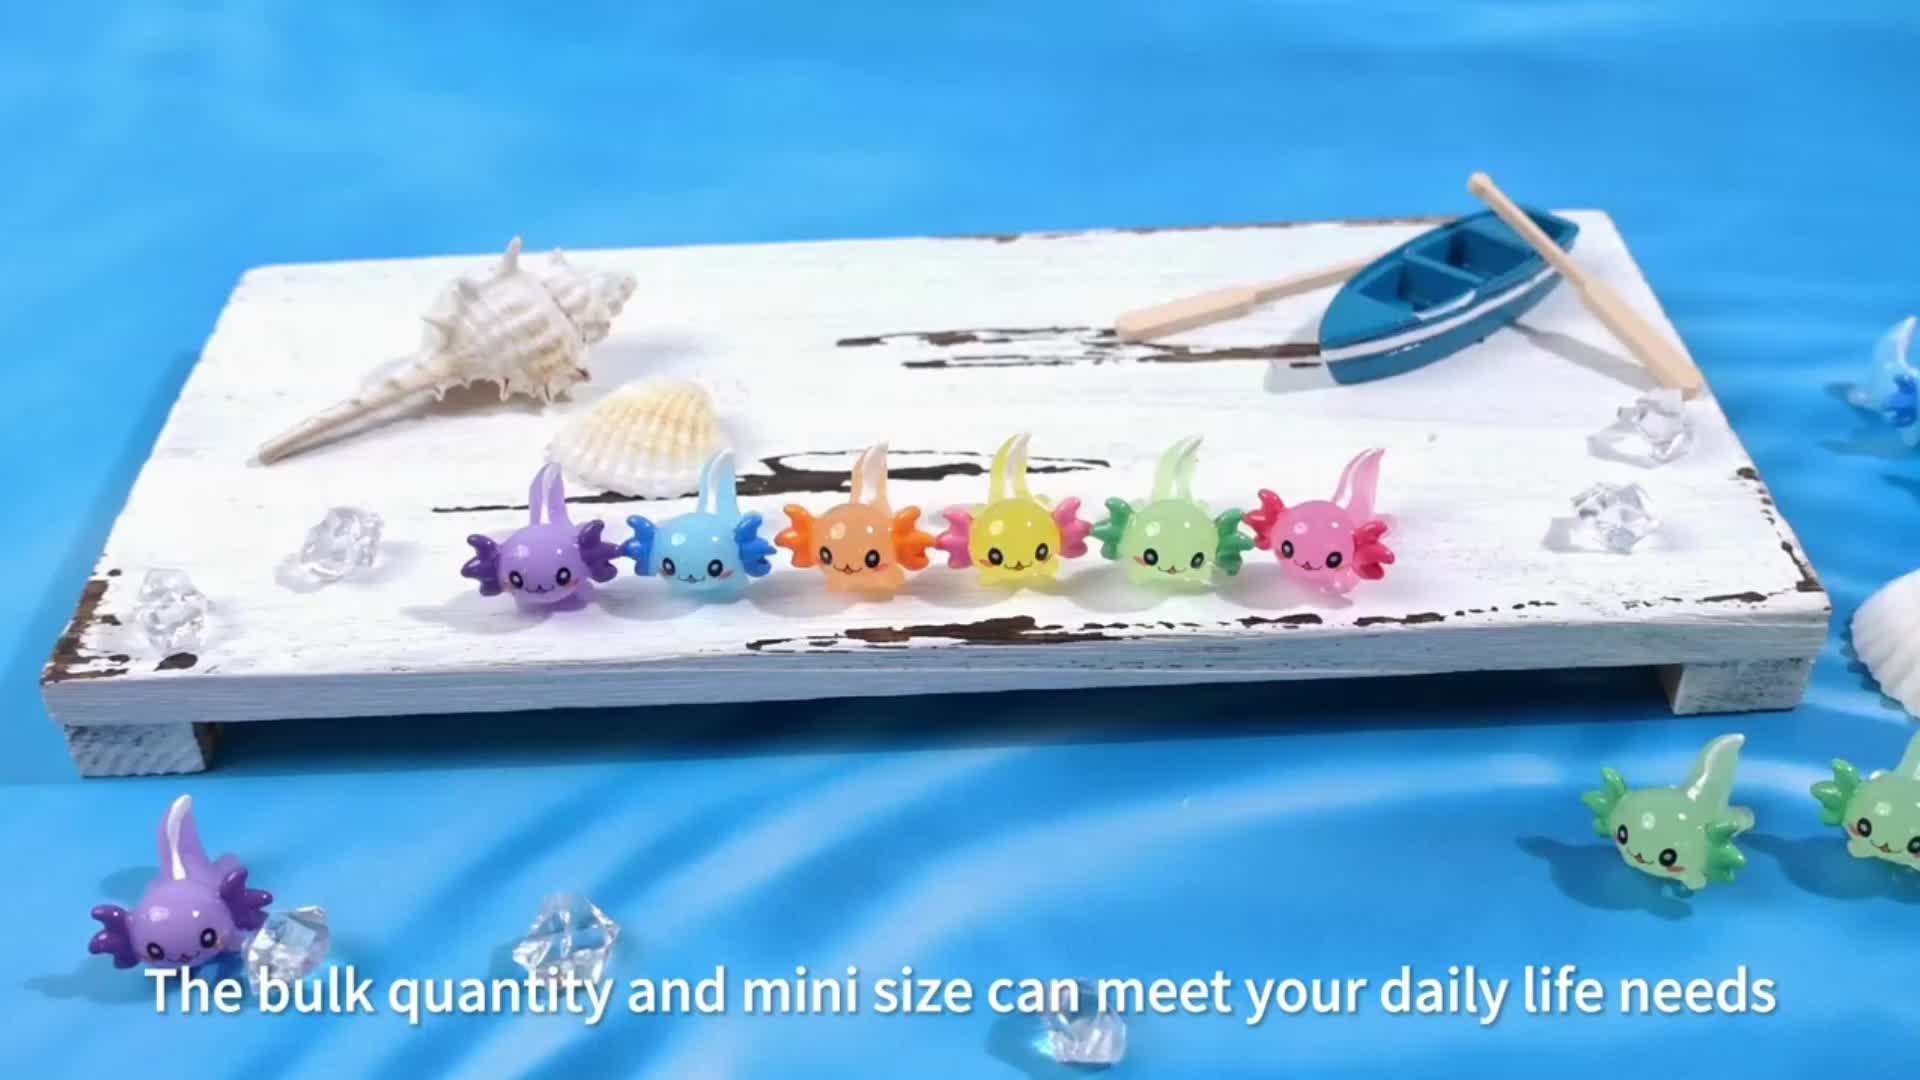 NewGtuizi Mini Axolotl Resin Charms 24Pcs Mini Axolotl Resin Figurine Toy  Miniature Axolotl Ornament Tiny Animal Figures for DIY Garden Dollhouse